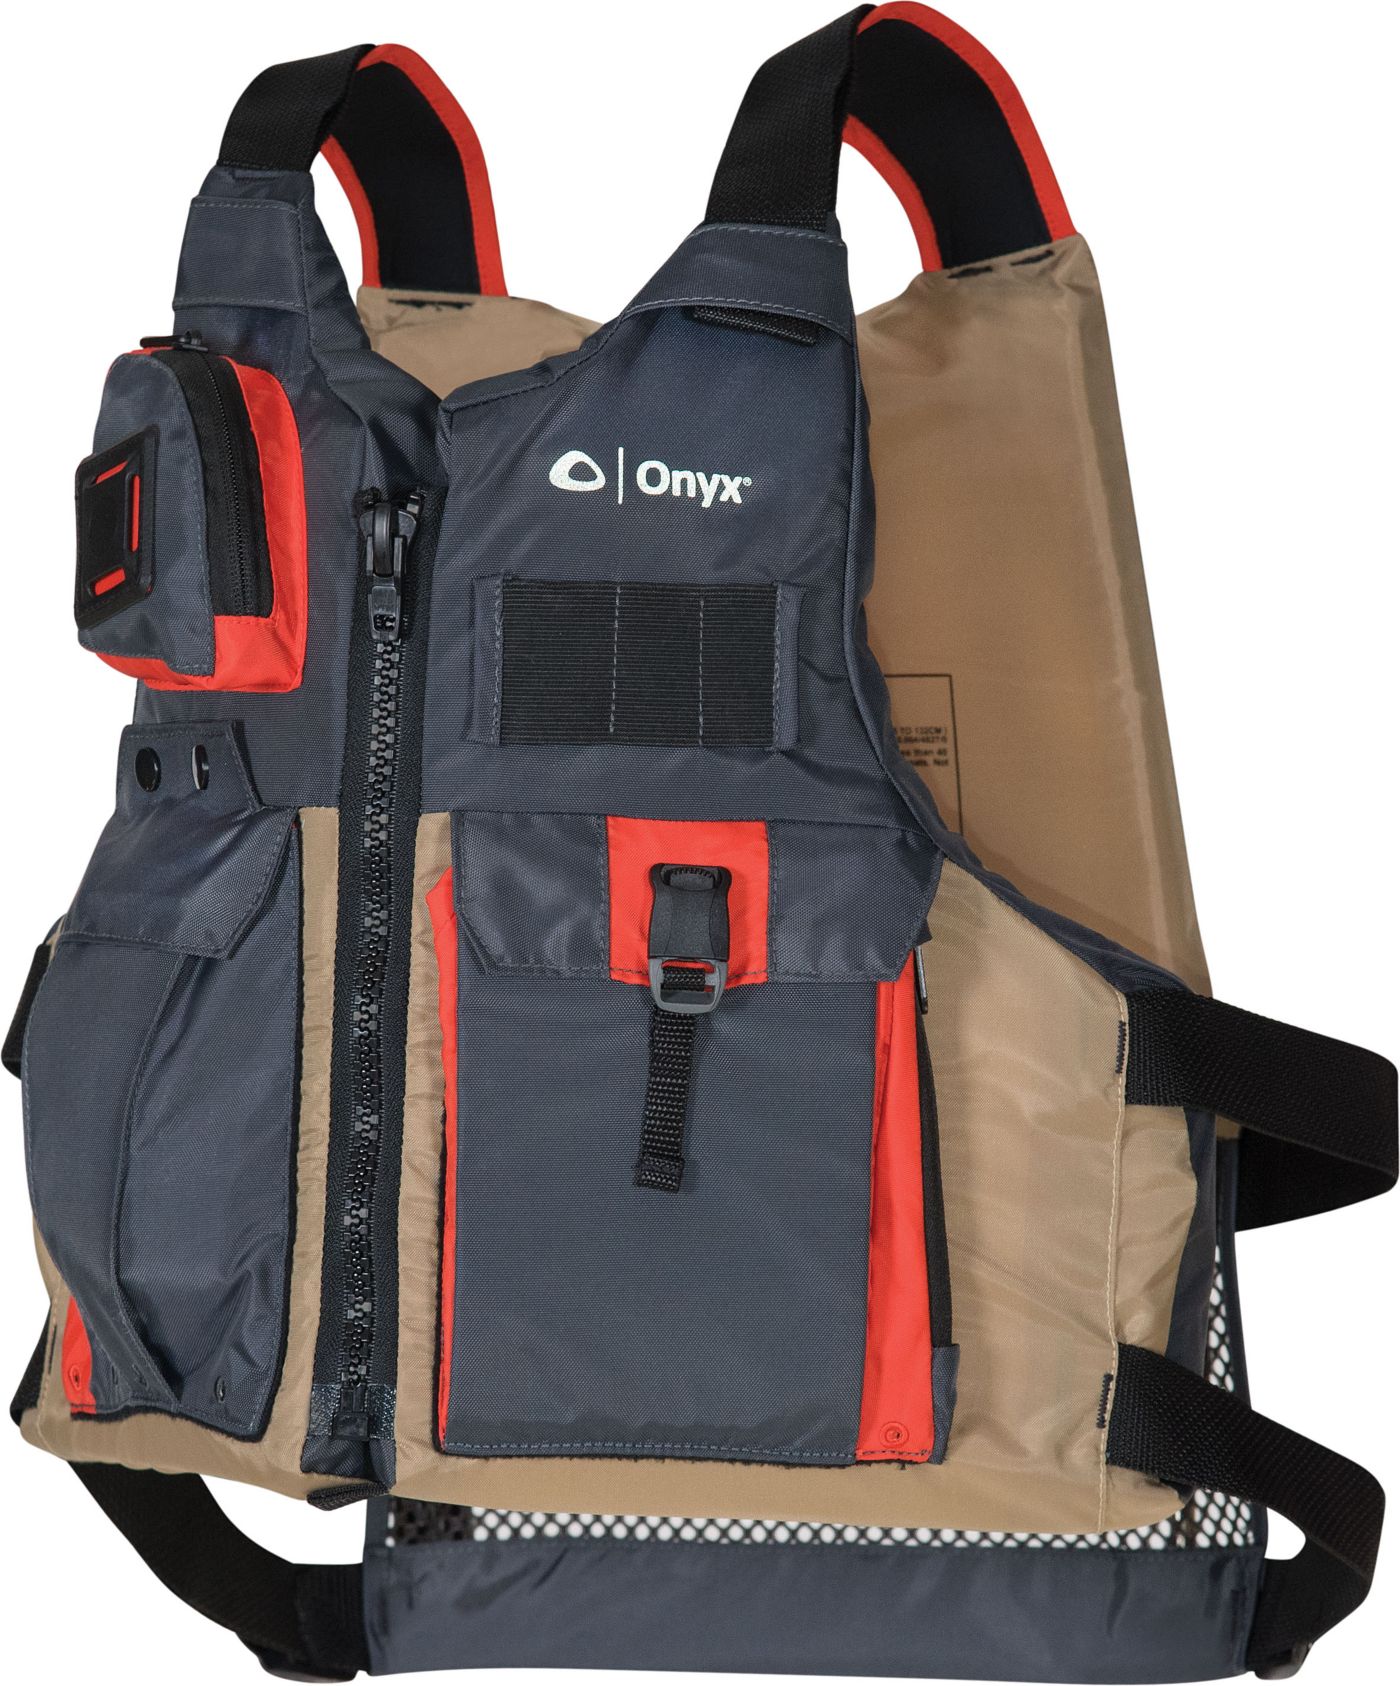 Onyx Adult Kayak Fishing Life Vest DICK'S Sporting Goods